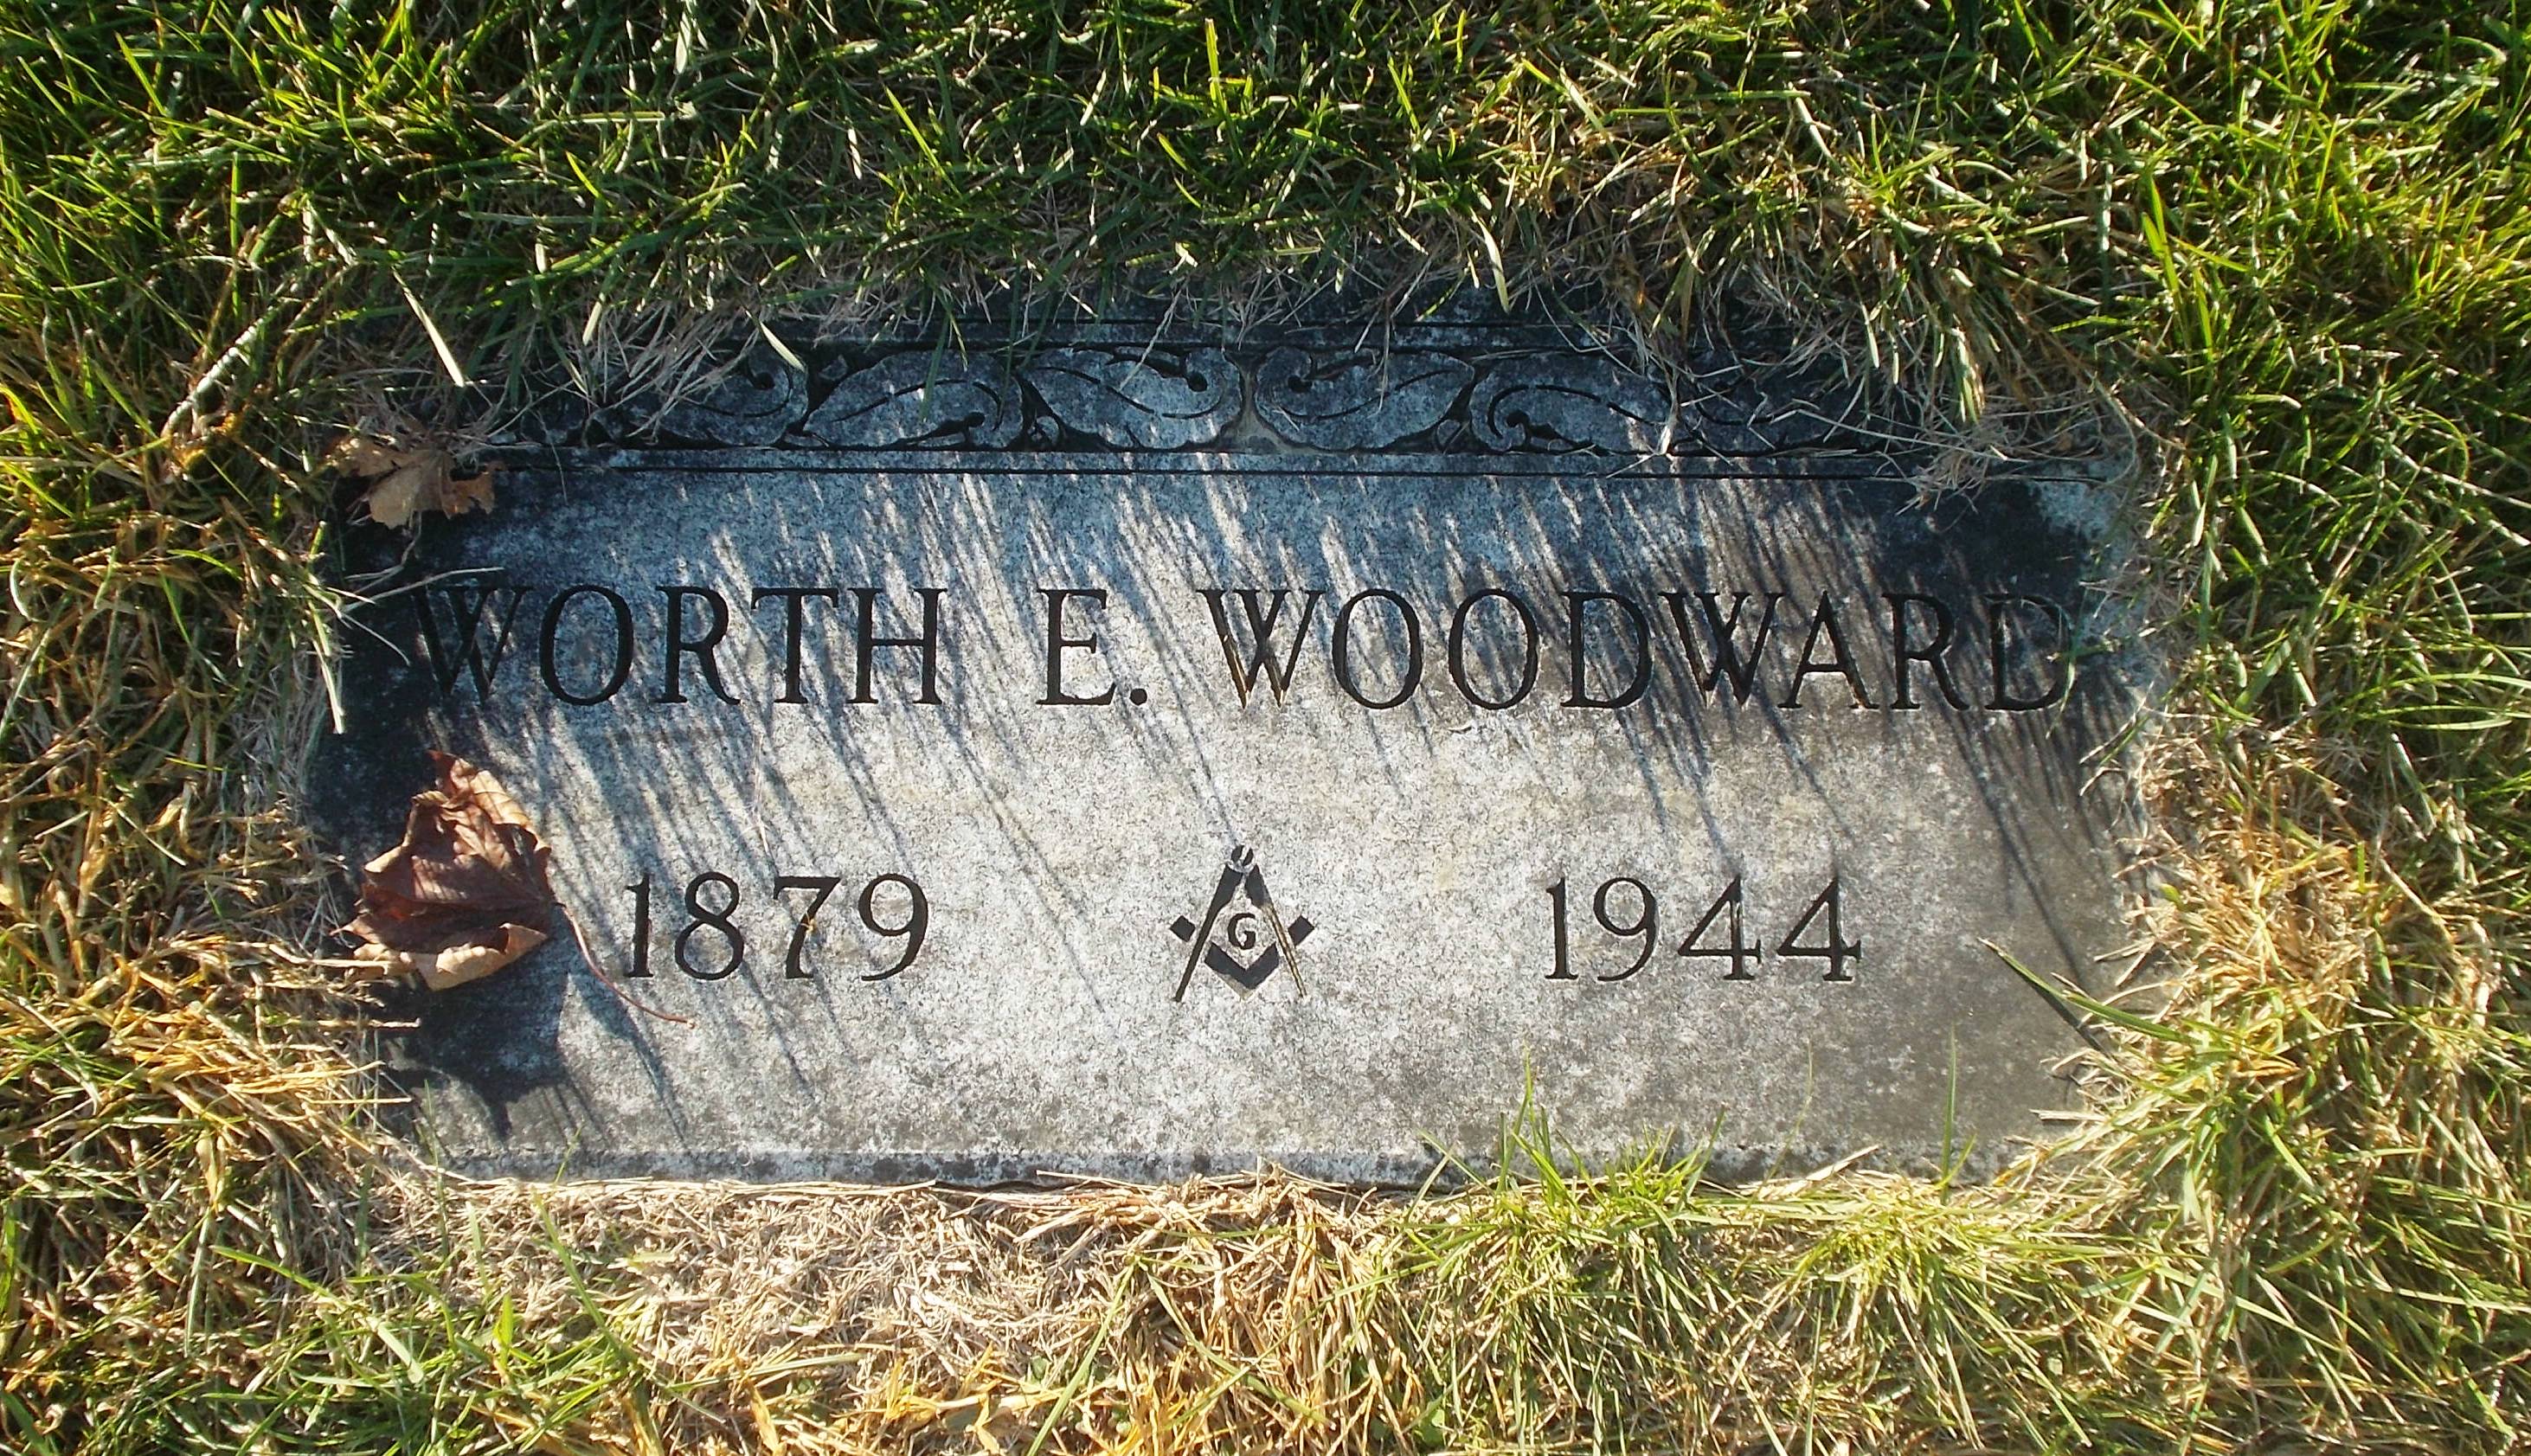 Worth E Woodward